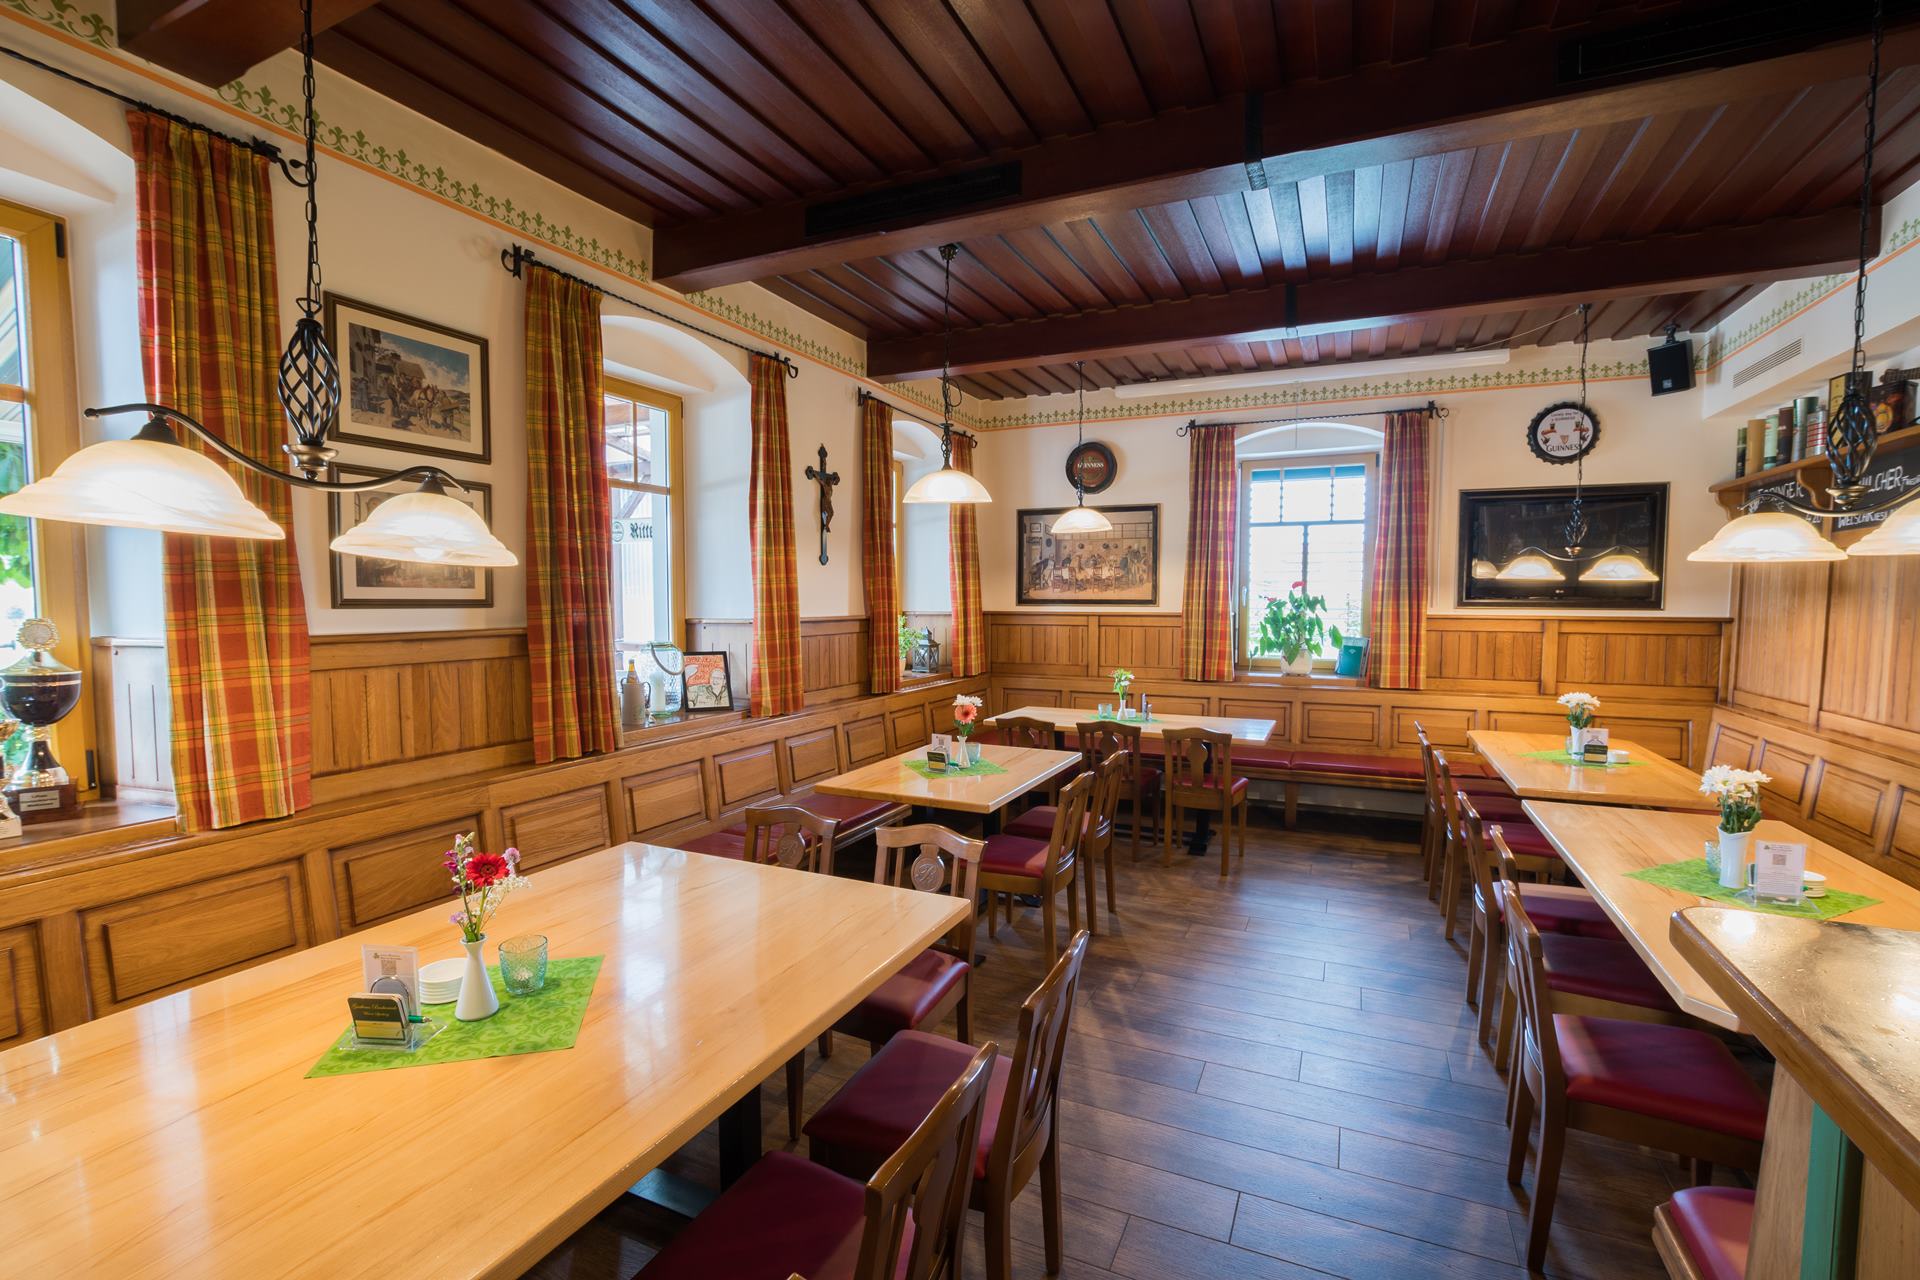 Gasthaus Boubenicek – Wirt in Spaching